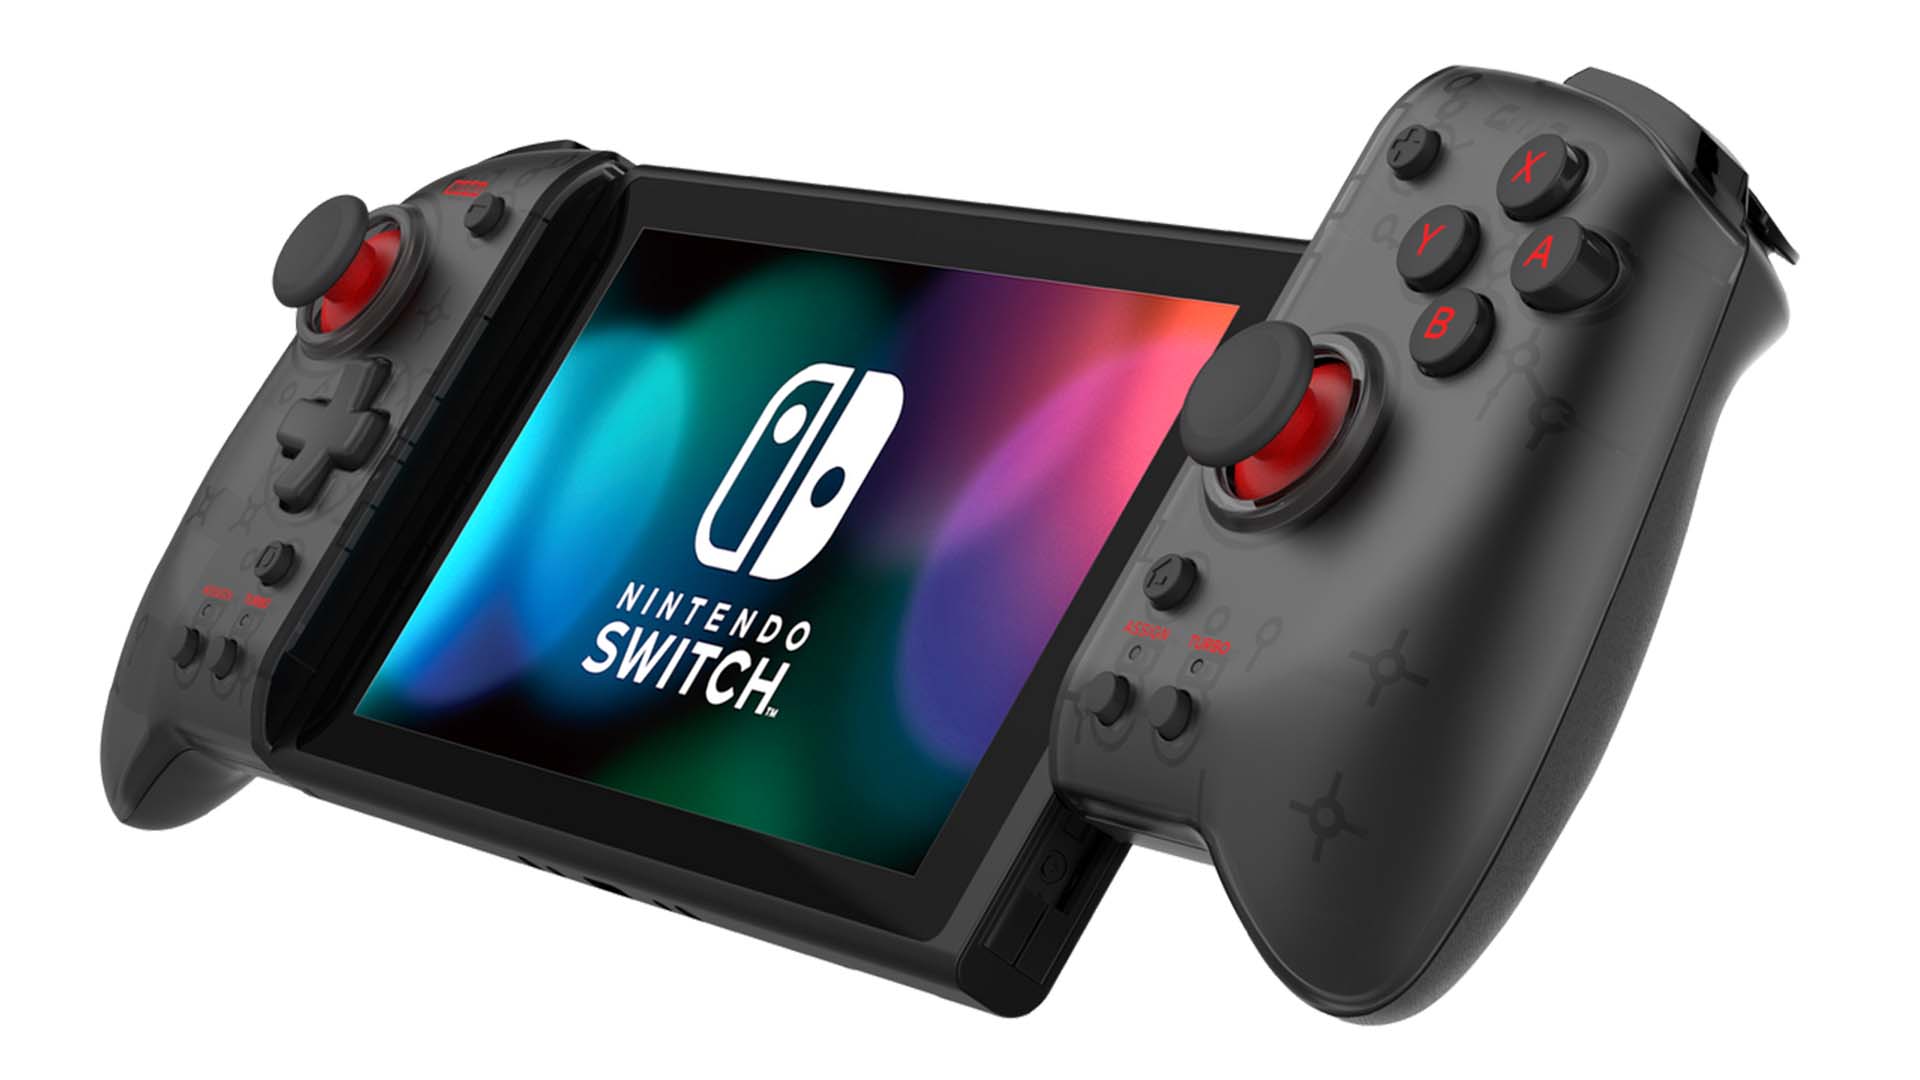 New Nintendo Switch Split Pad Pro HORI Controllers